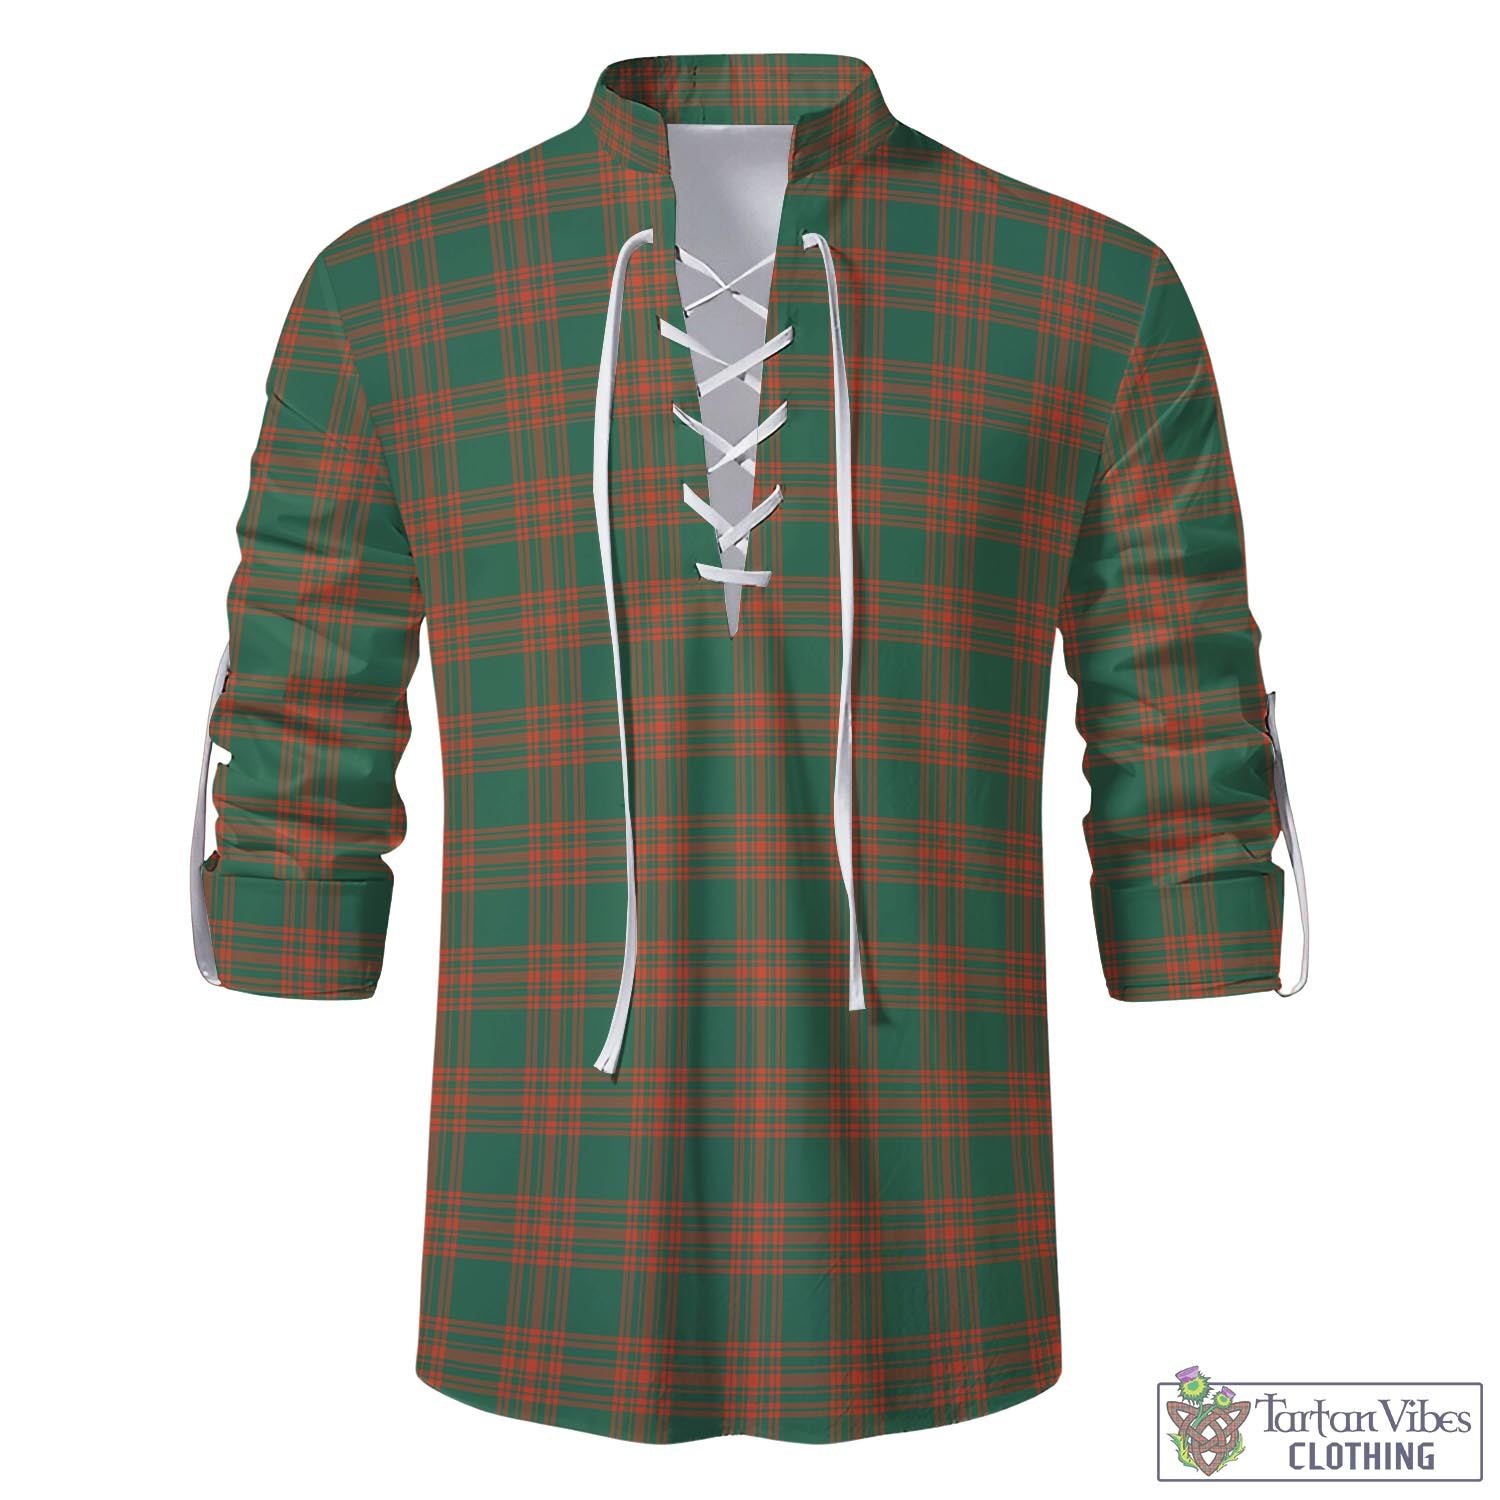 Tartan Vibes Clothing Menzies Green Ancient Tartan Men's Scottish Traditional Jacobite Ghillie Kilt Shirt